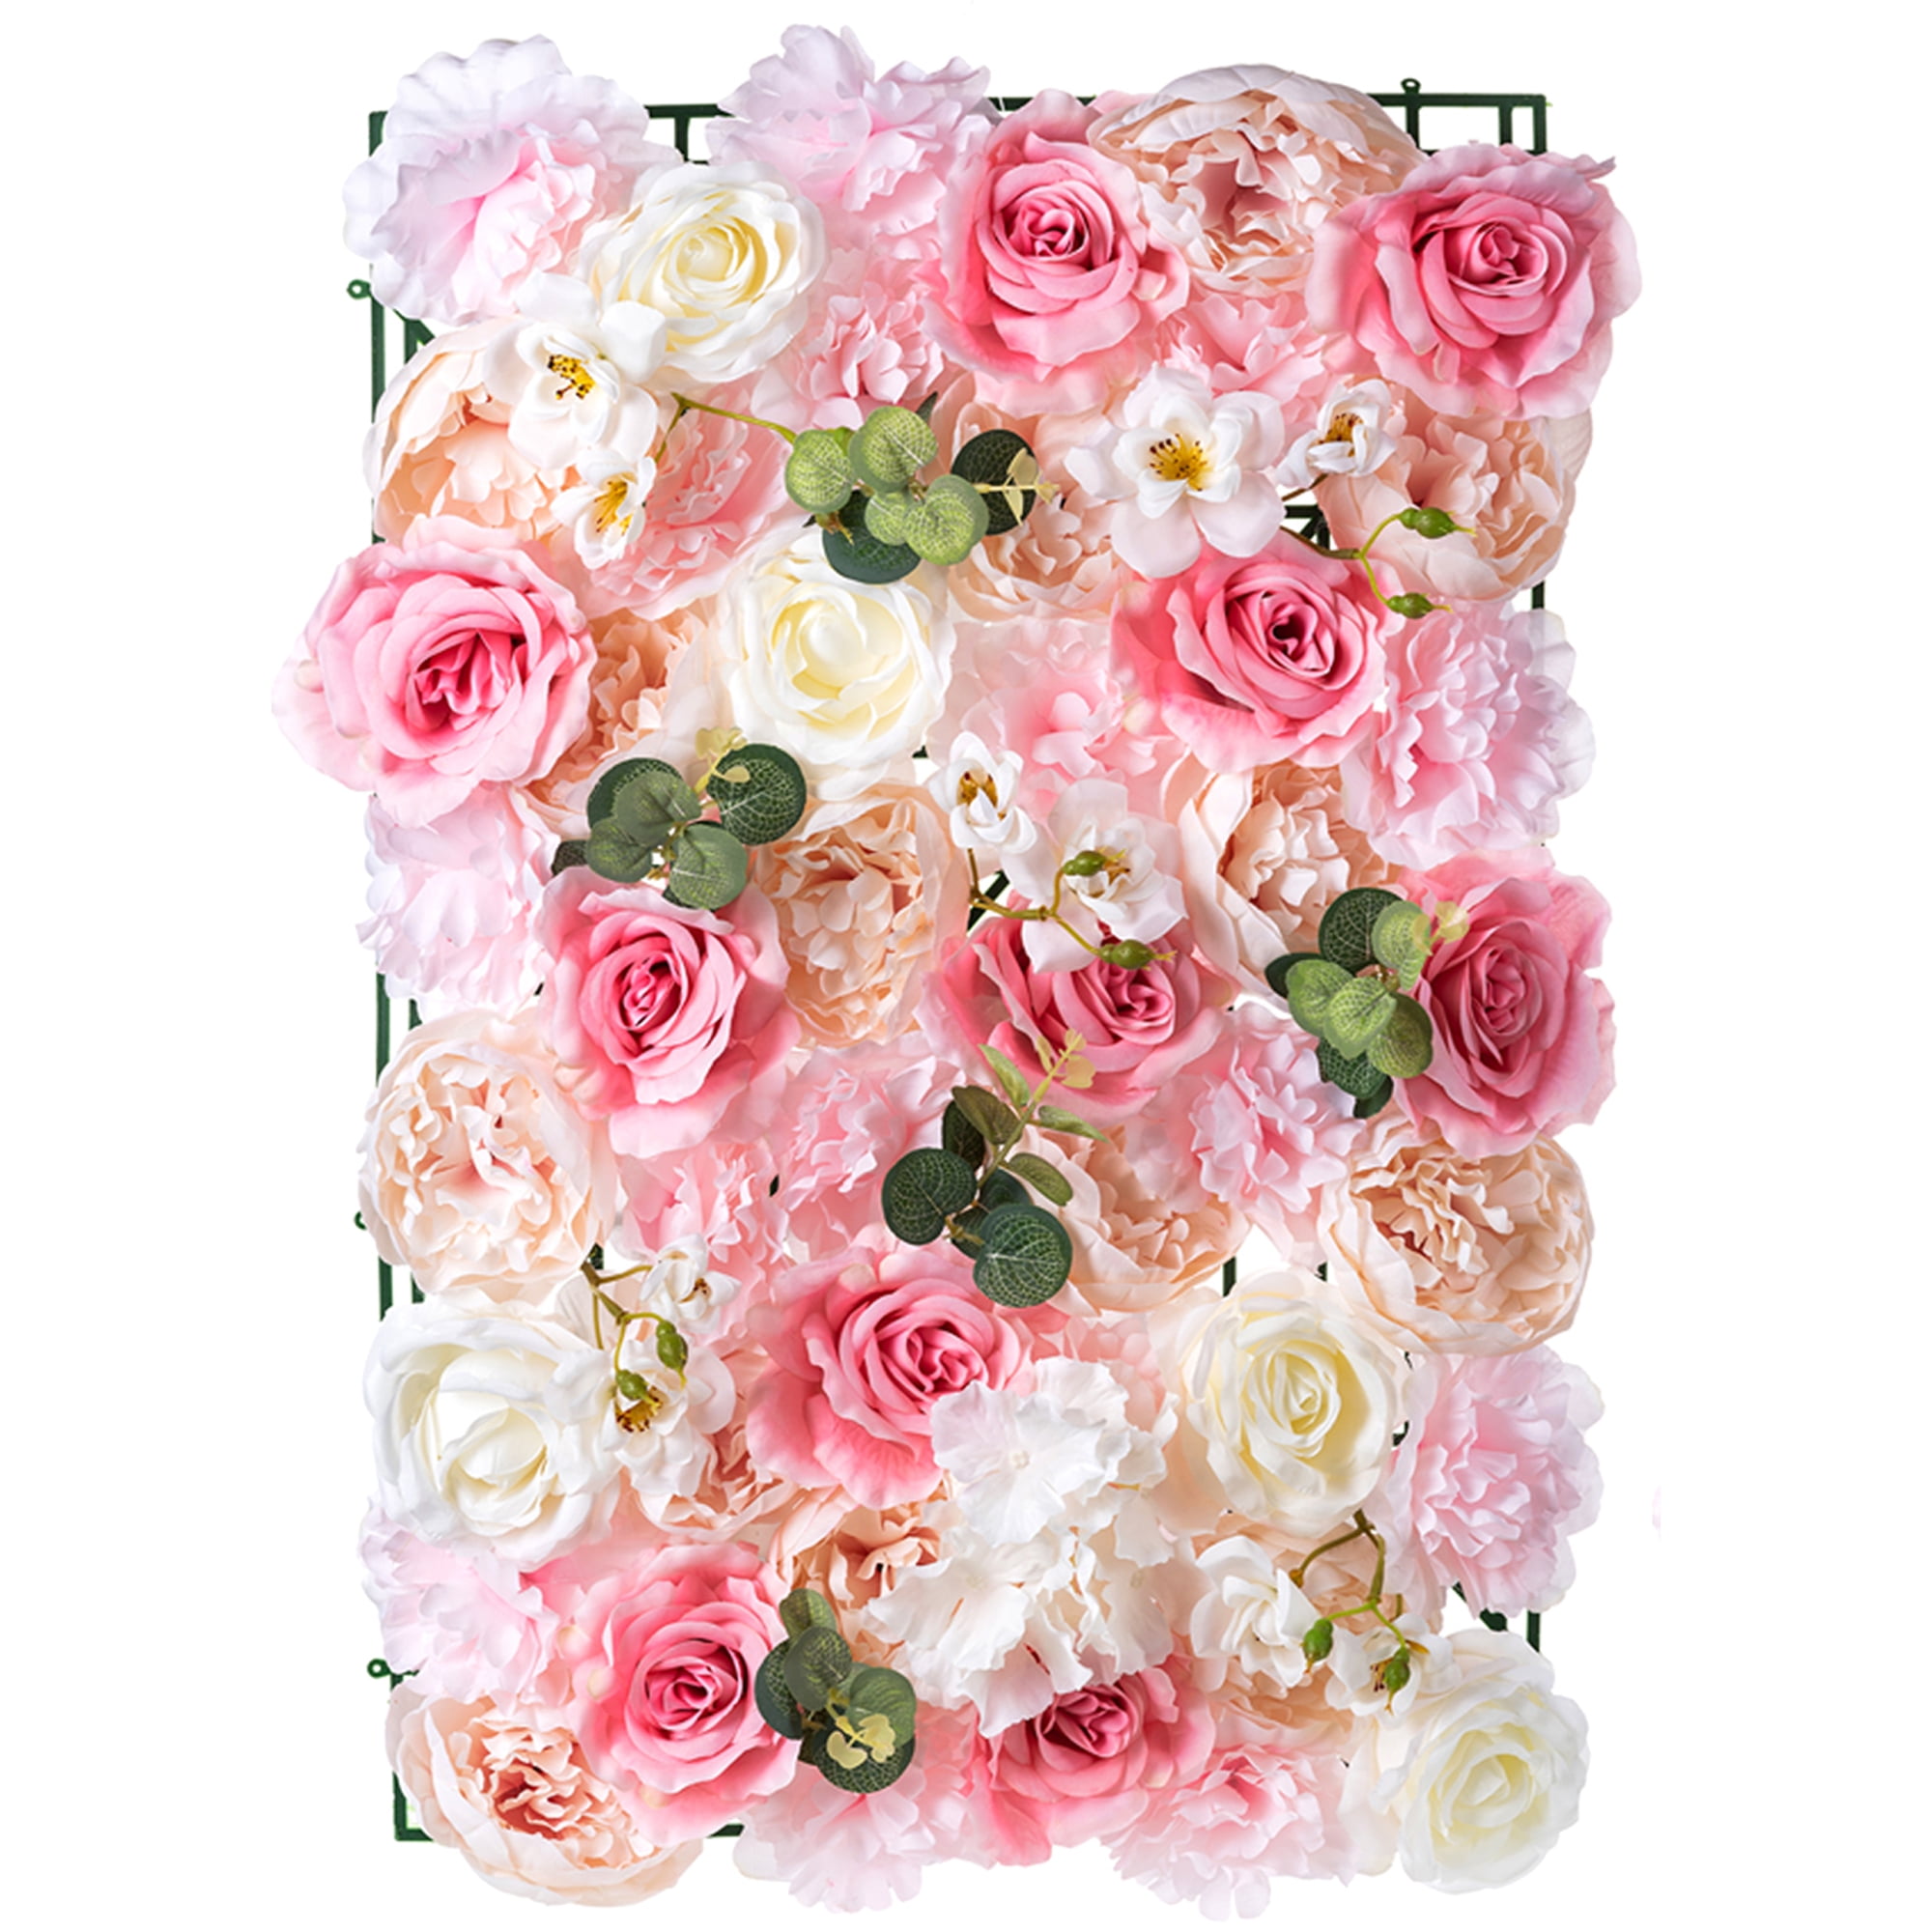 Artificial Silk Hydrangea Rose Flower Wall Panel Home Wedding Venue Floral Decor 